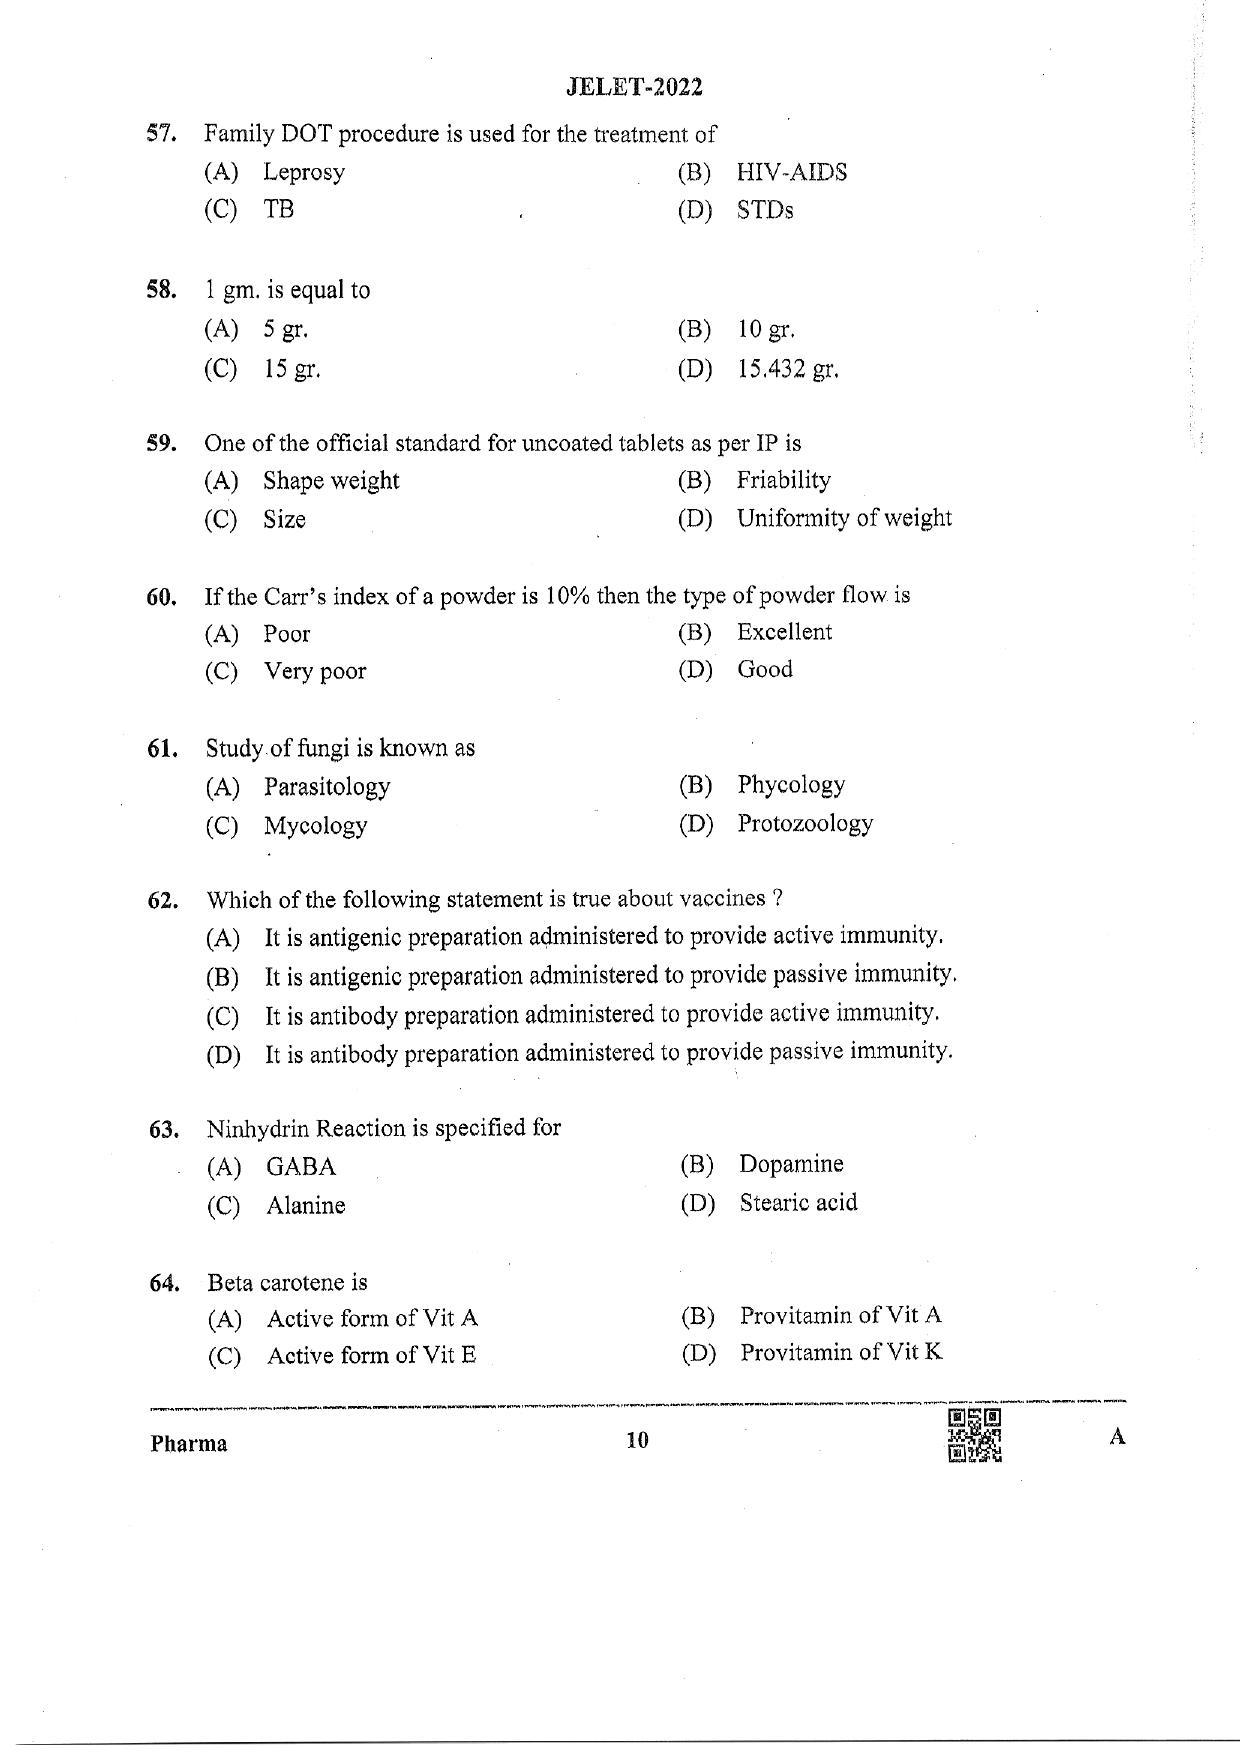 WBJEE  JELET 2022 Paper II ( Pharmacy) - Page 10